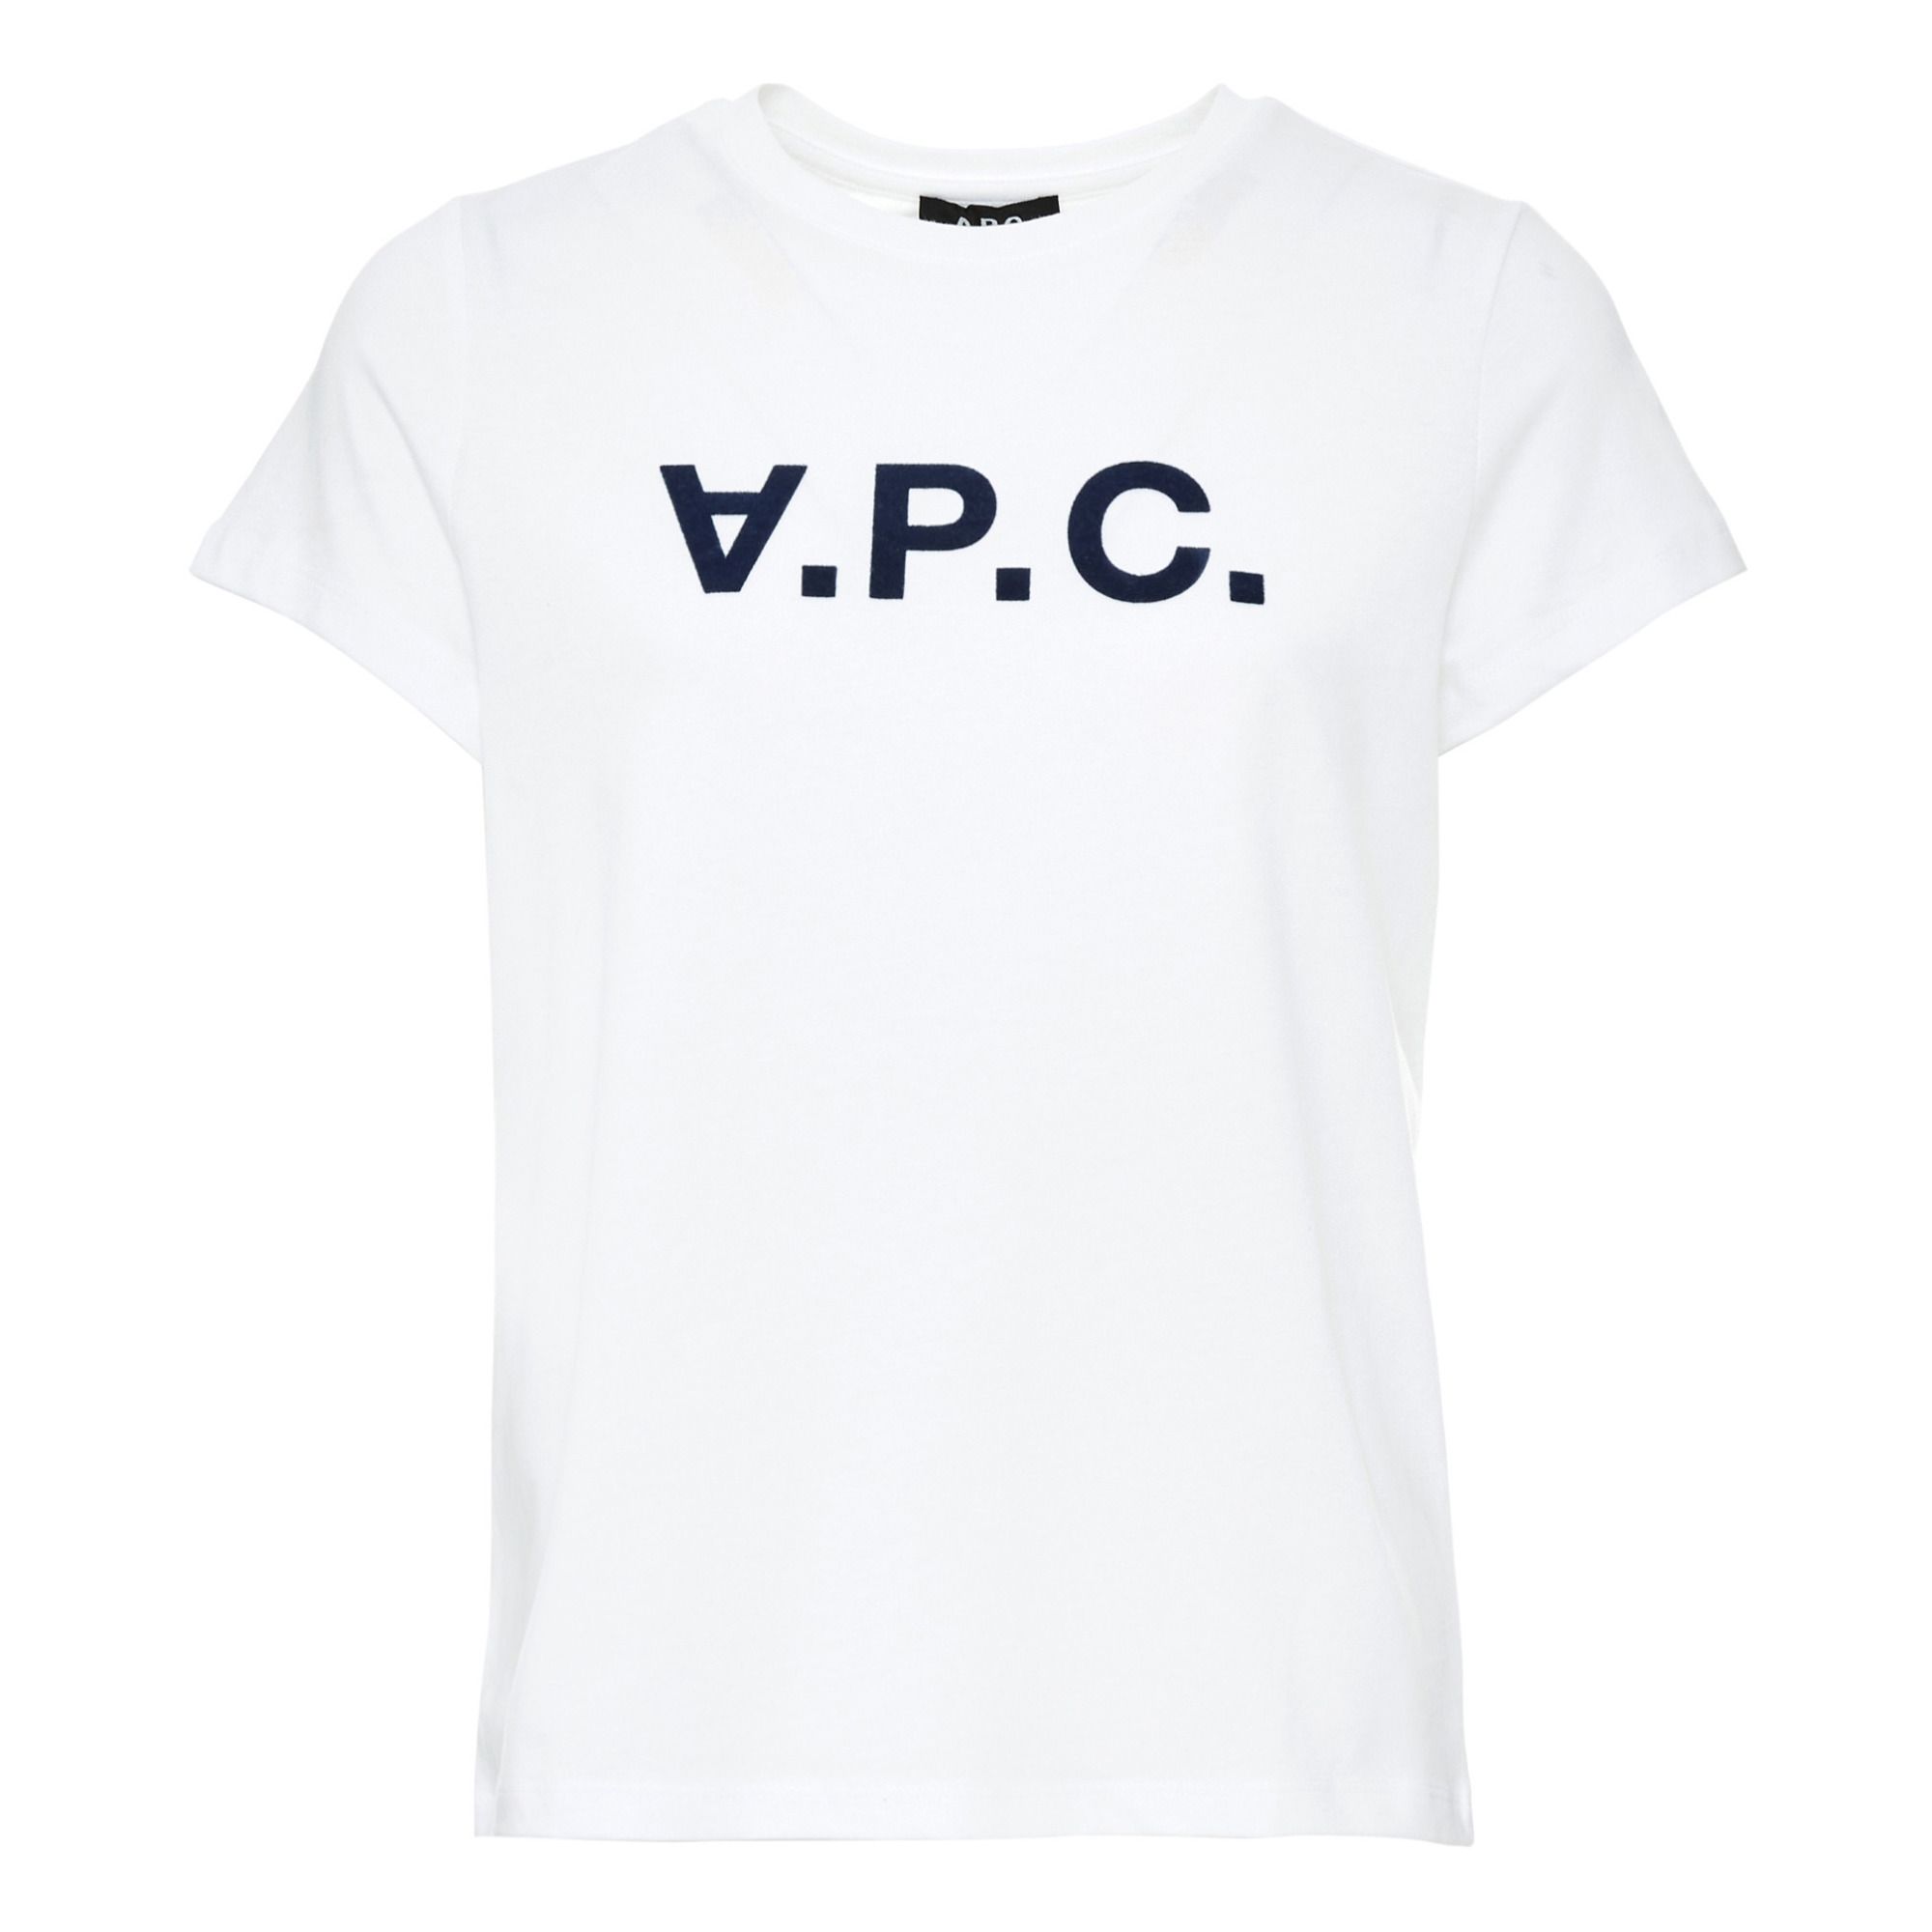 A.P.C. - T-shirt Vpc F Coton Bio - Femme - Bleu marine